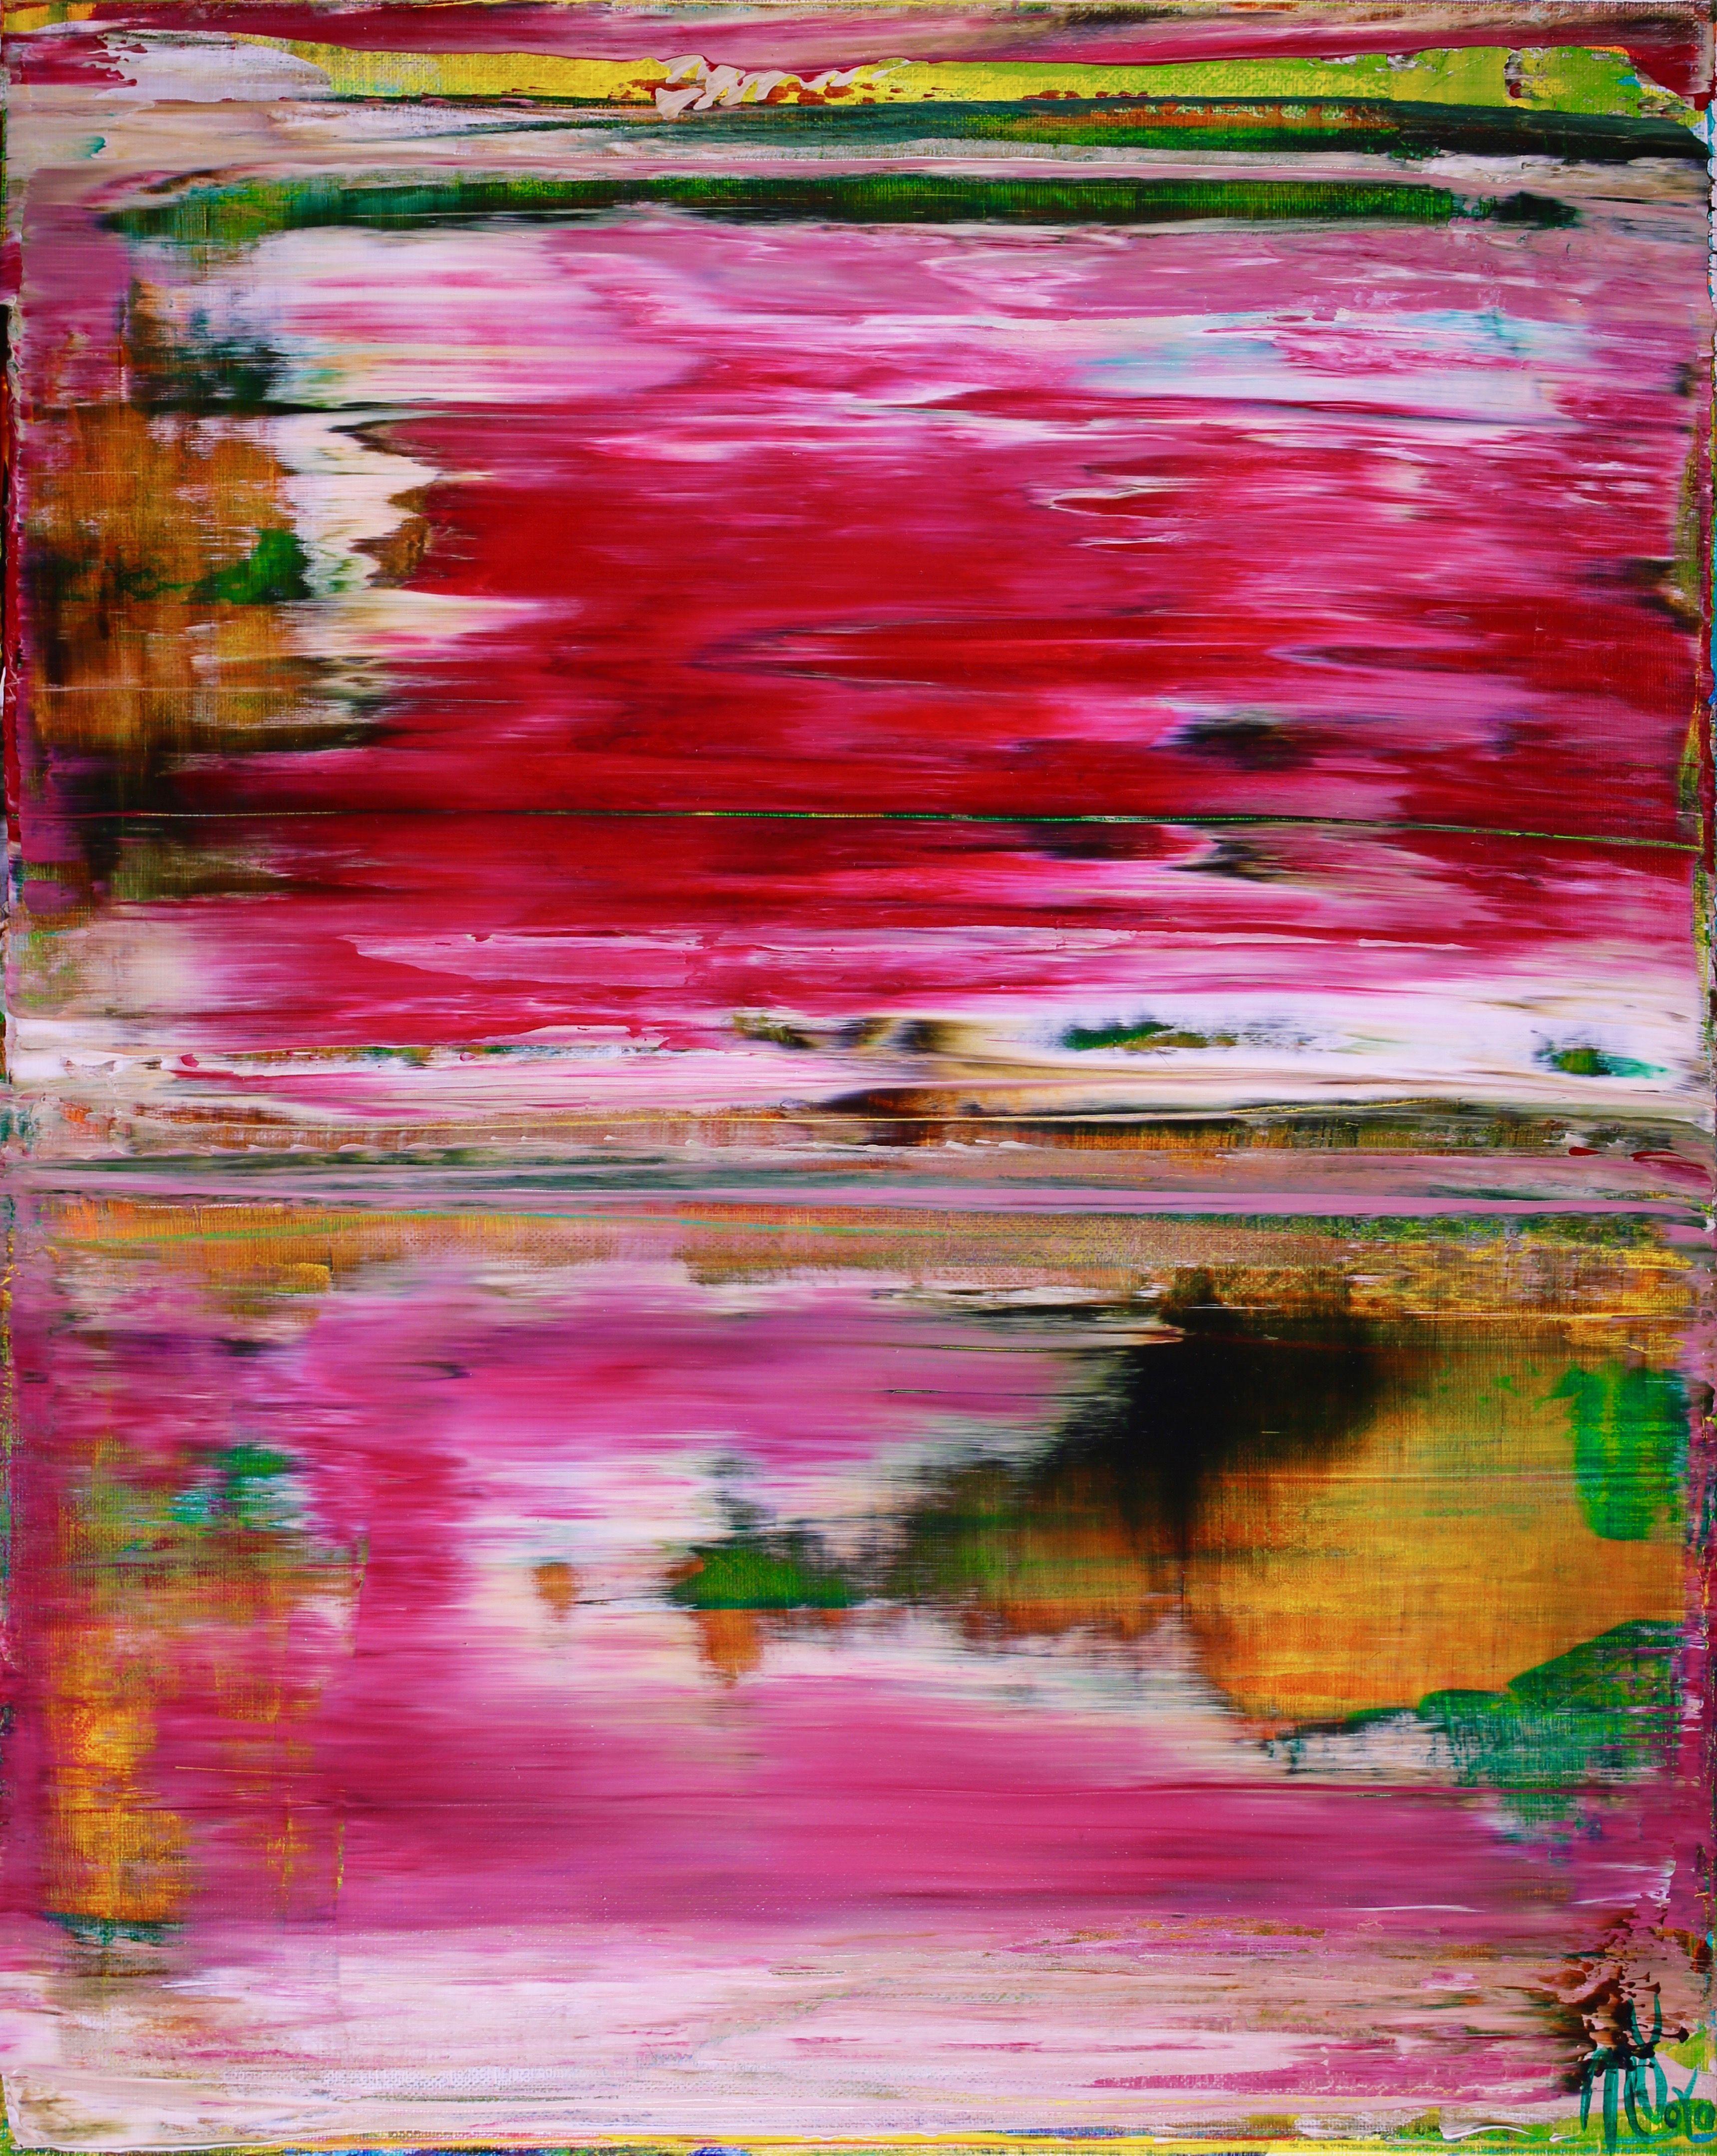 Abstract Painting Nestor Toro - Falaises californiennes rougeoyantes, peinture, acrylique sur toile